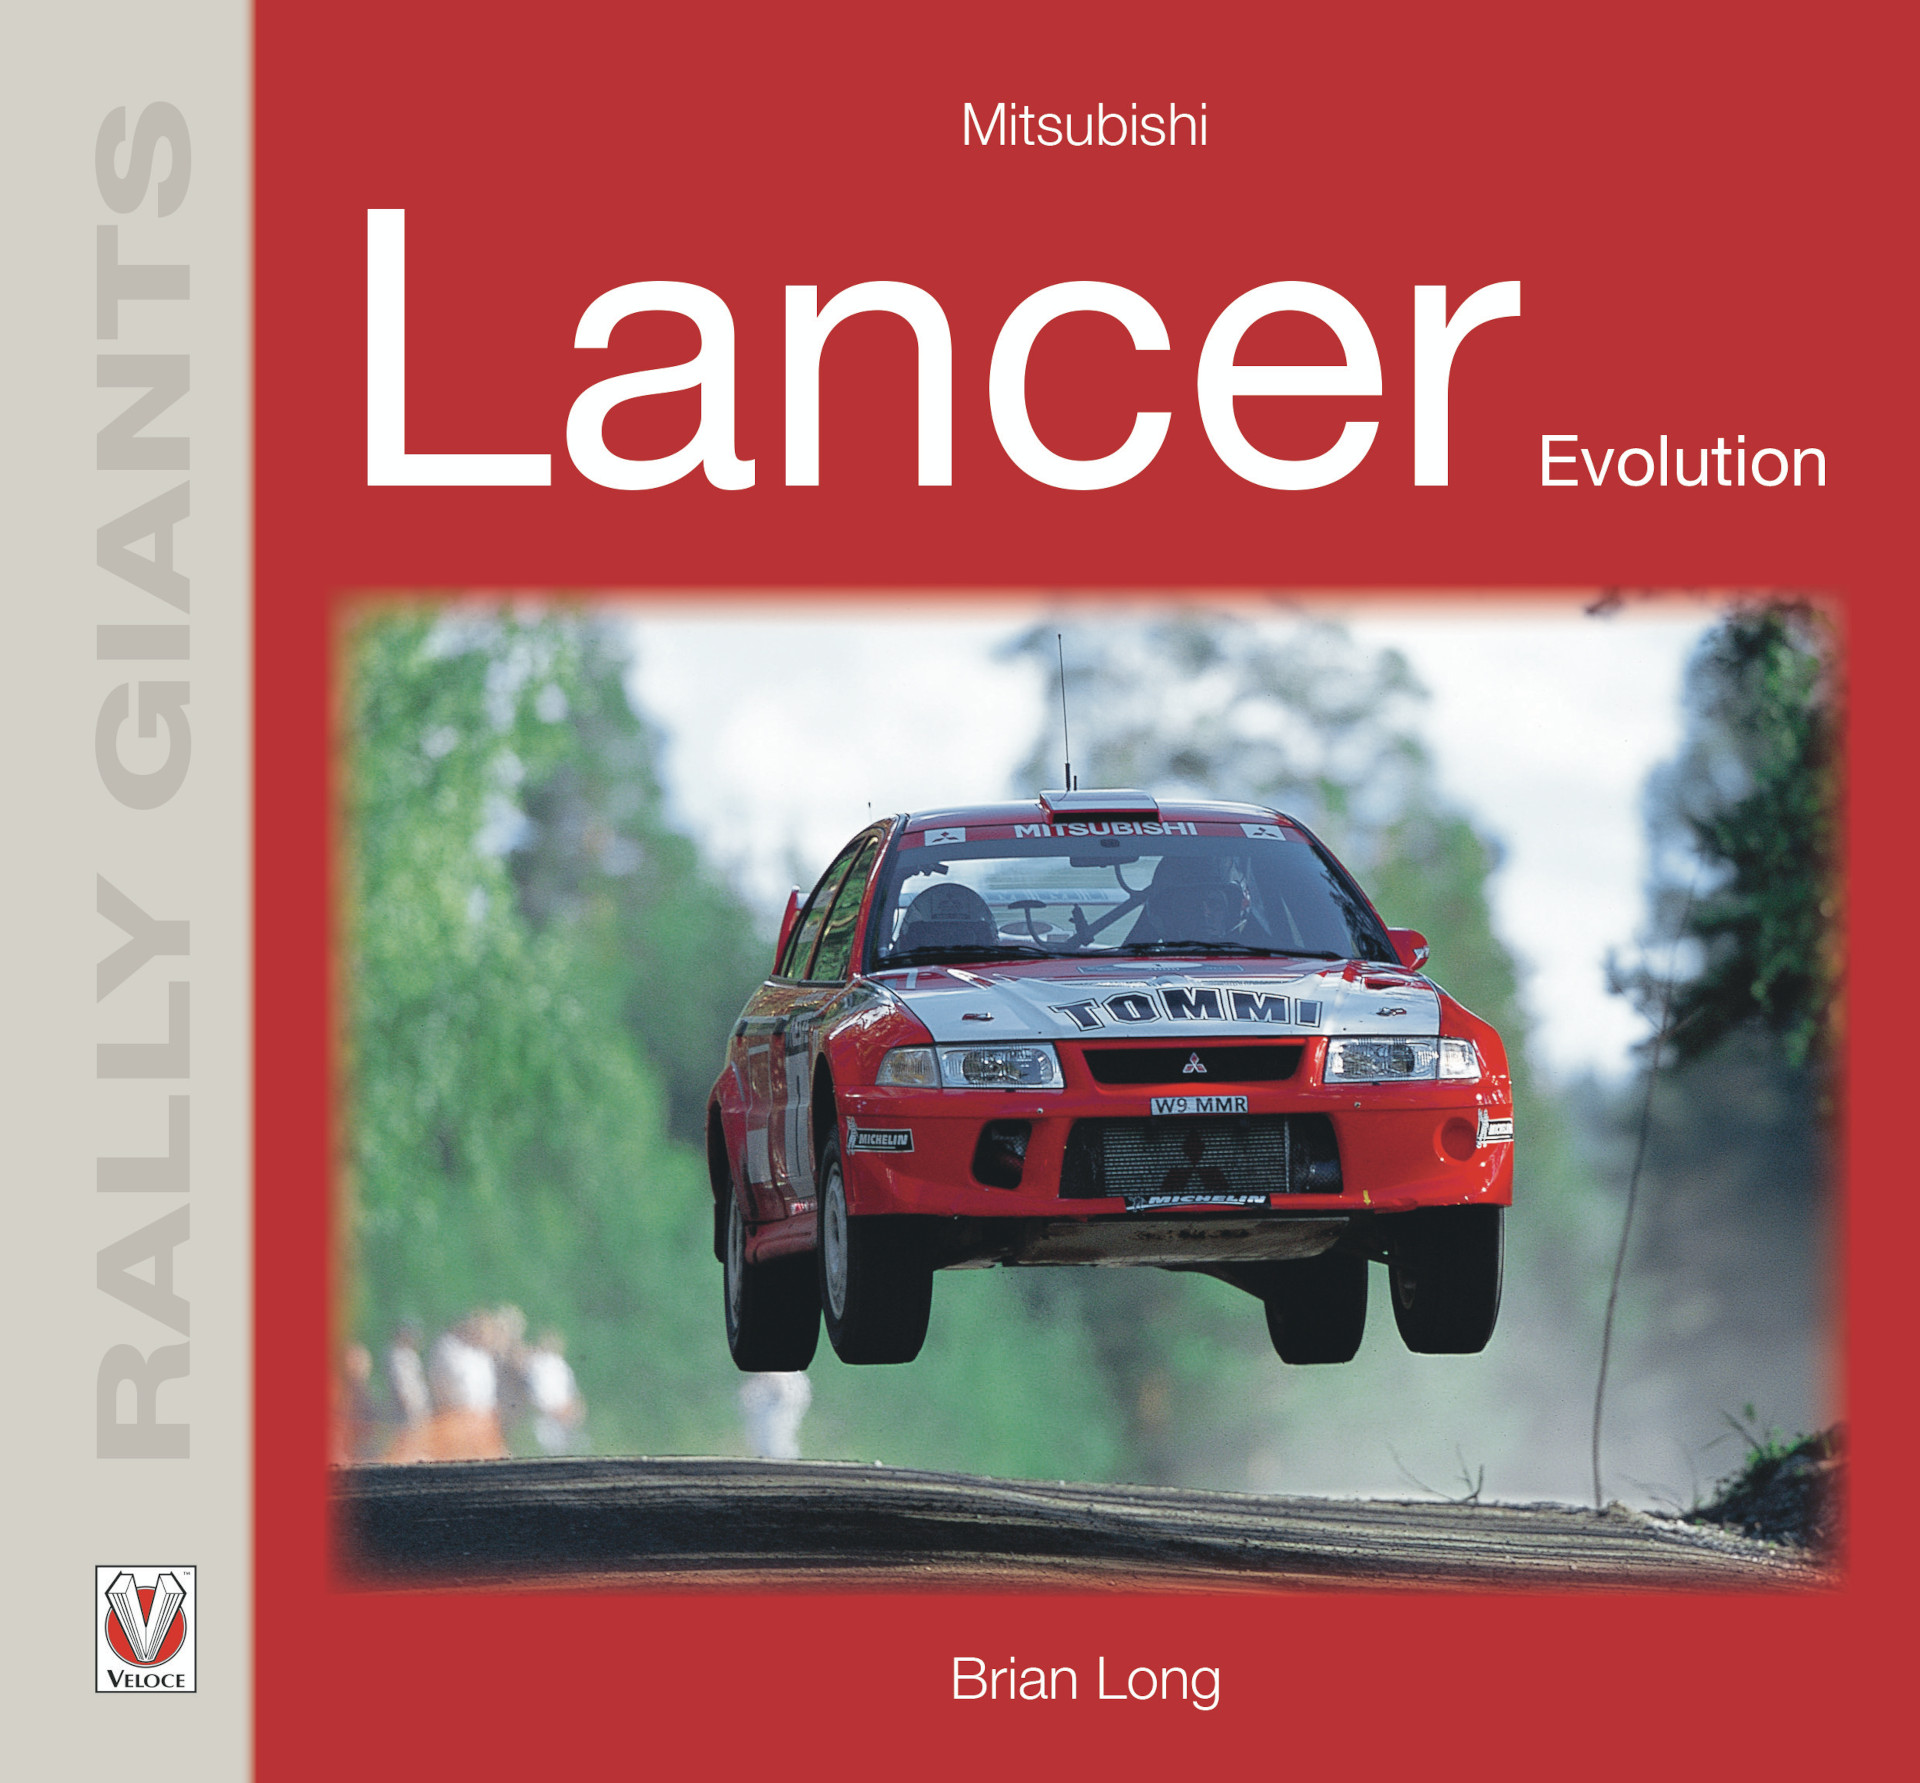 Mitsubishi Lancer Evolution by Brian Long